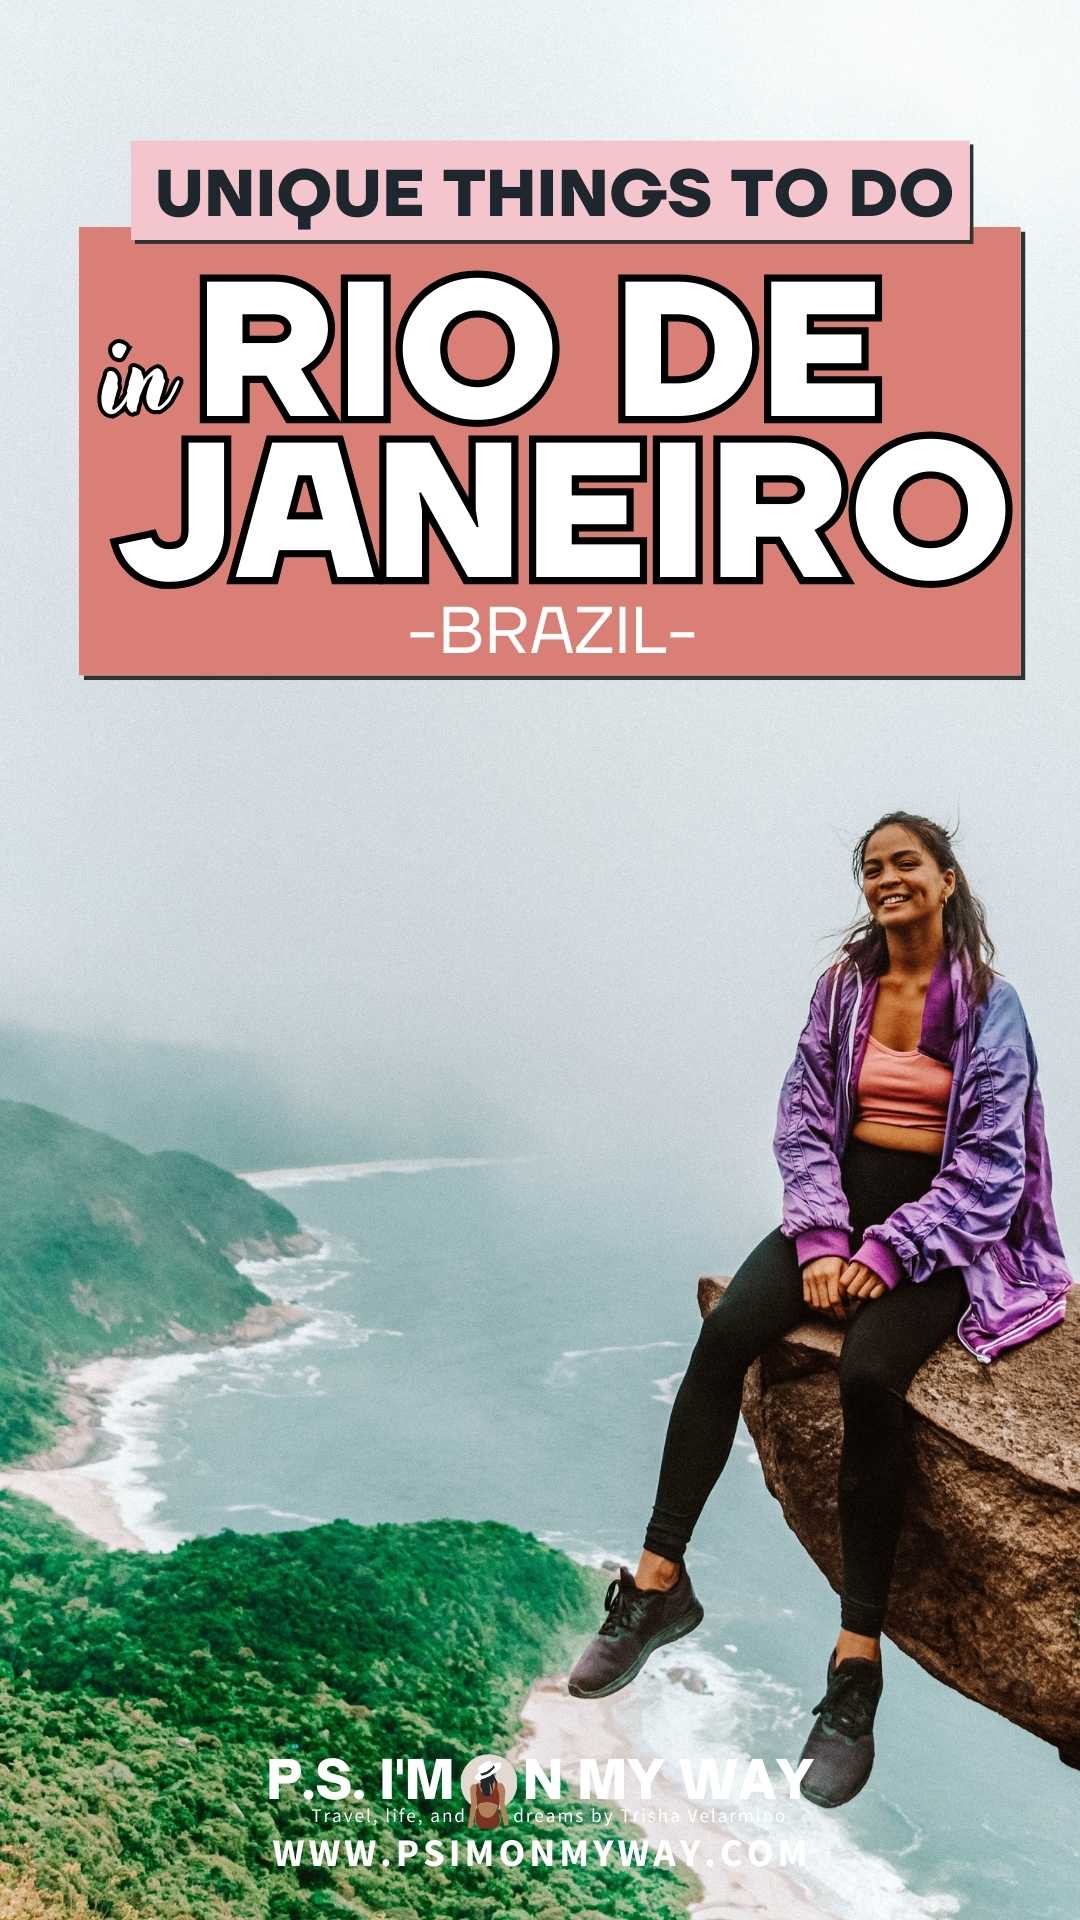 Trips to Rio de Janeiro: Enjoy Vacation in Brazil